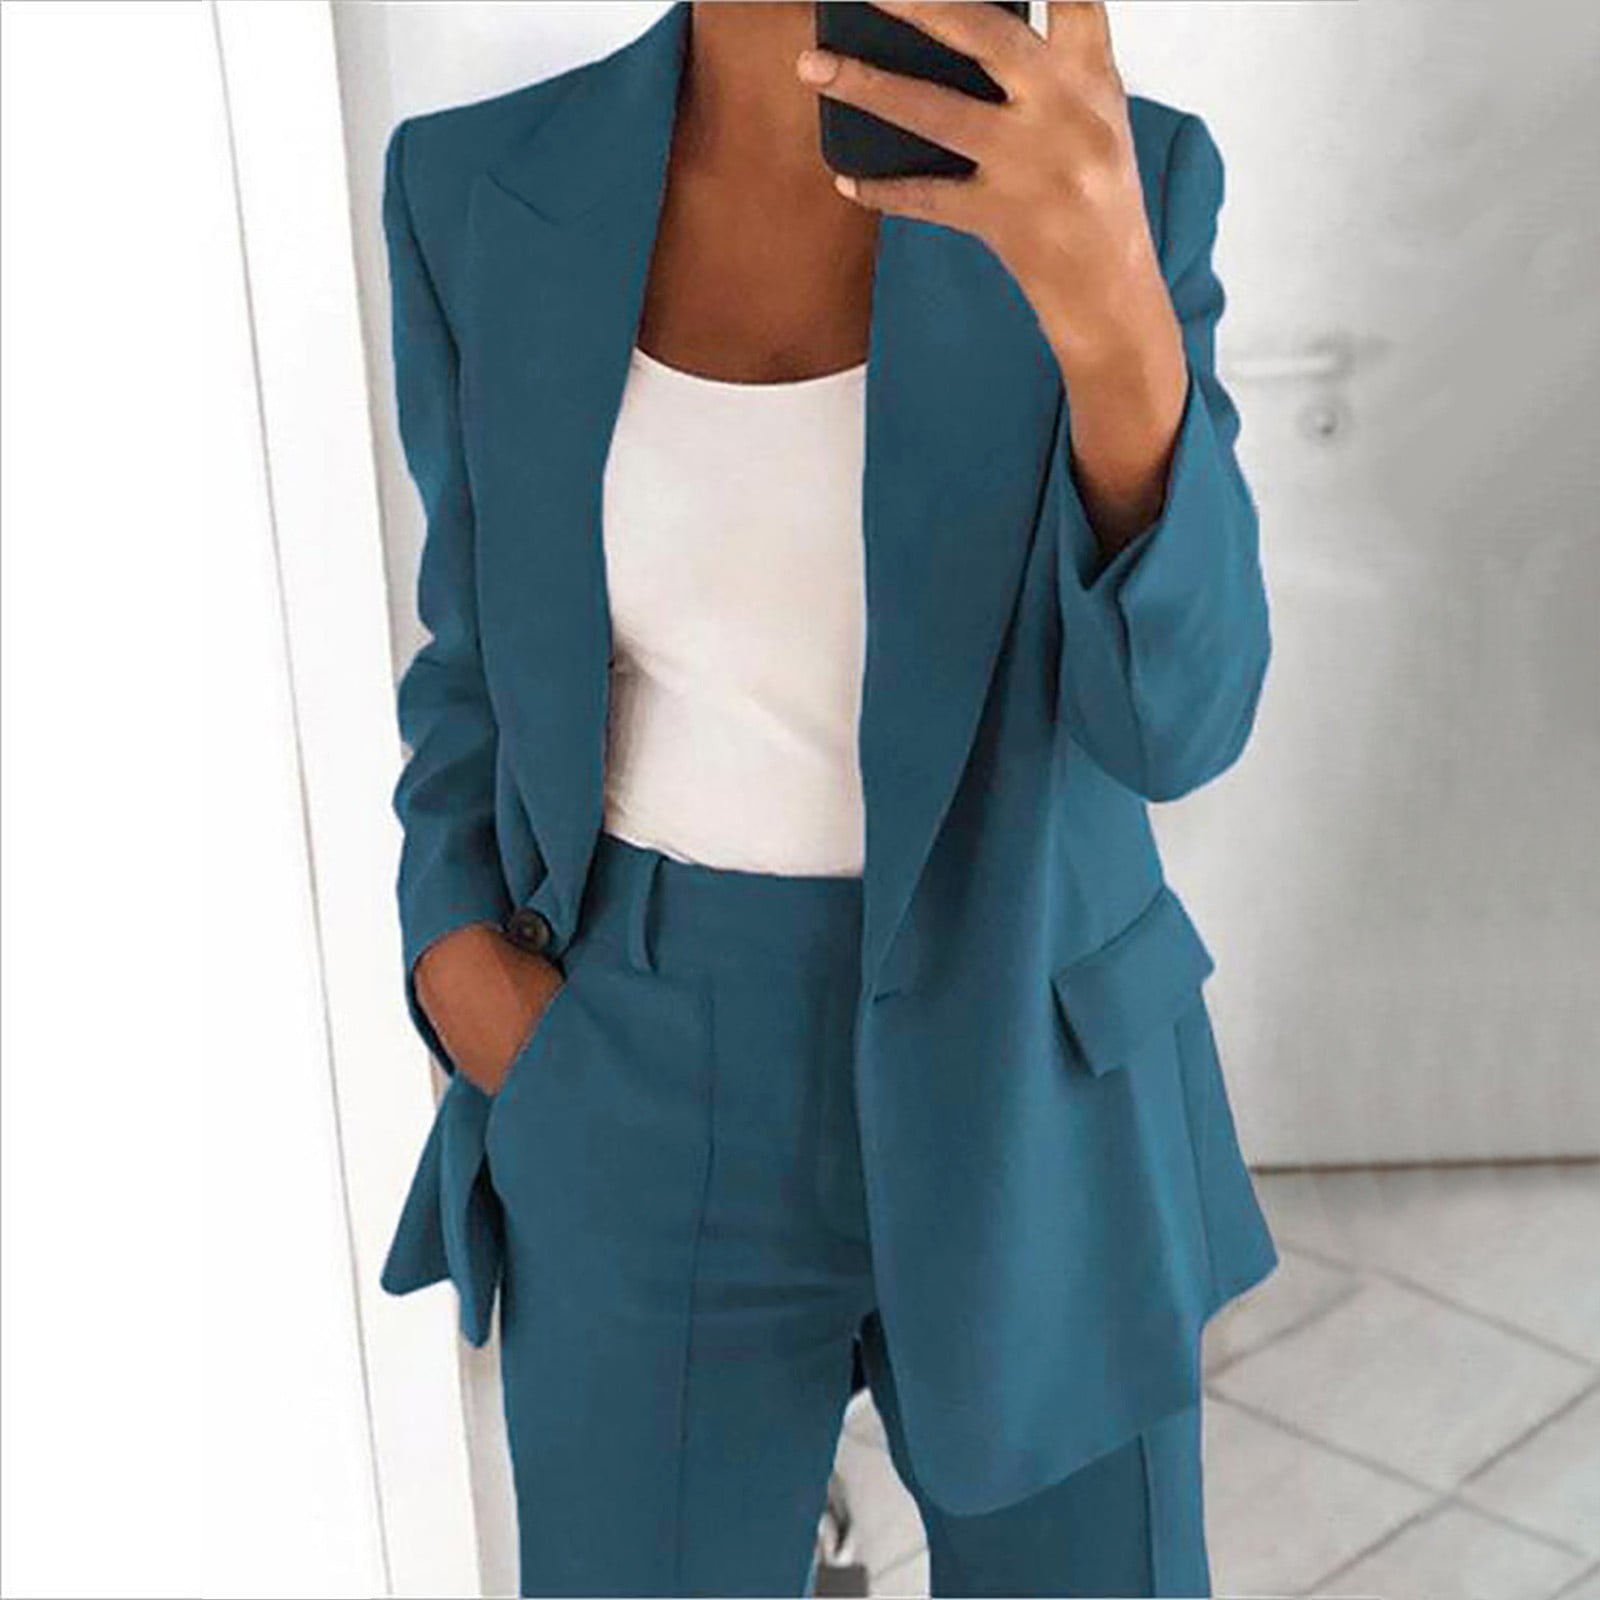 Royal Blue Women's Suit Jacket Manufacturer in USA, UK